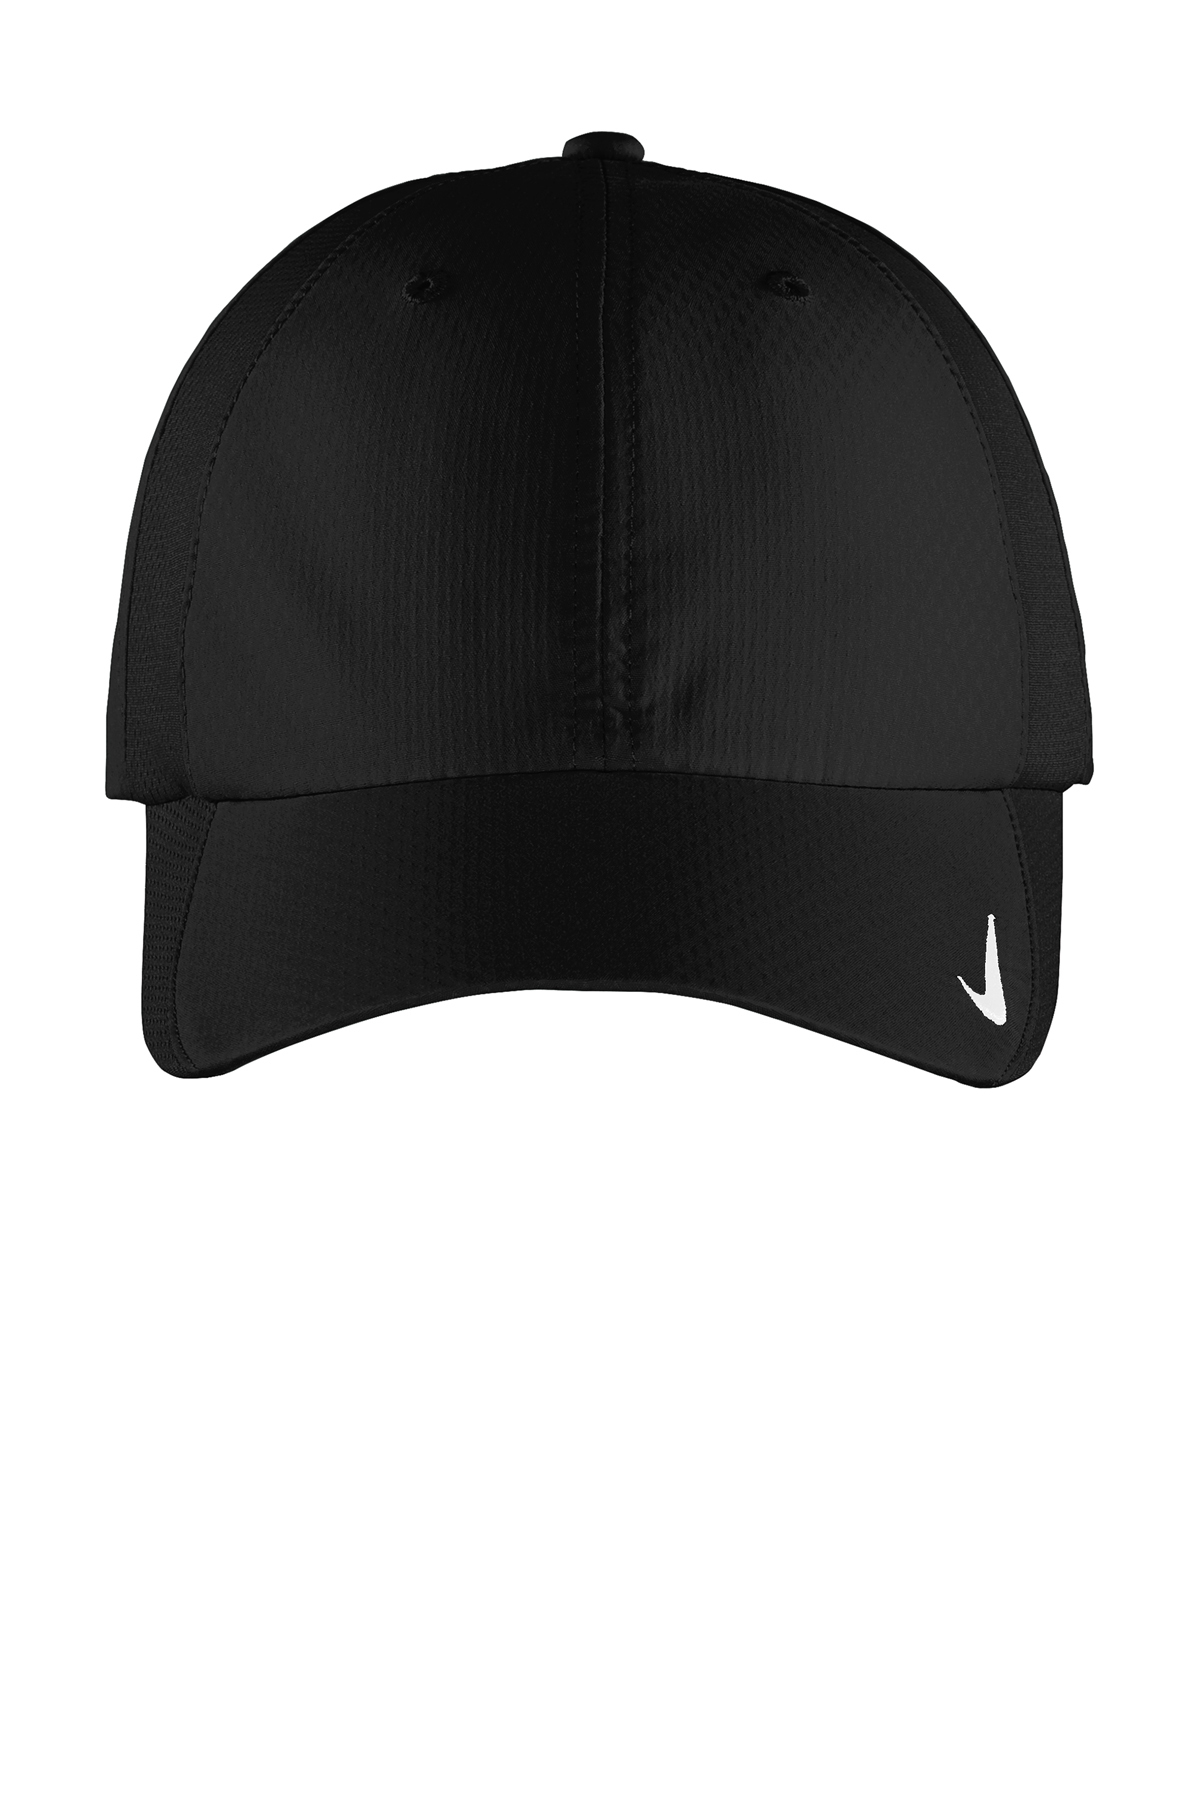 Nike Sphere Performance Cap | Product | SanMar